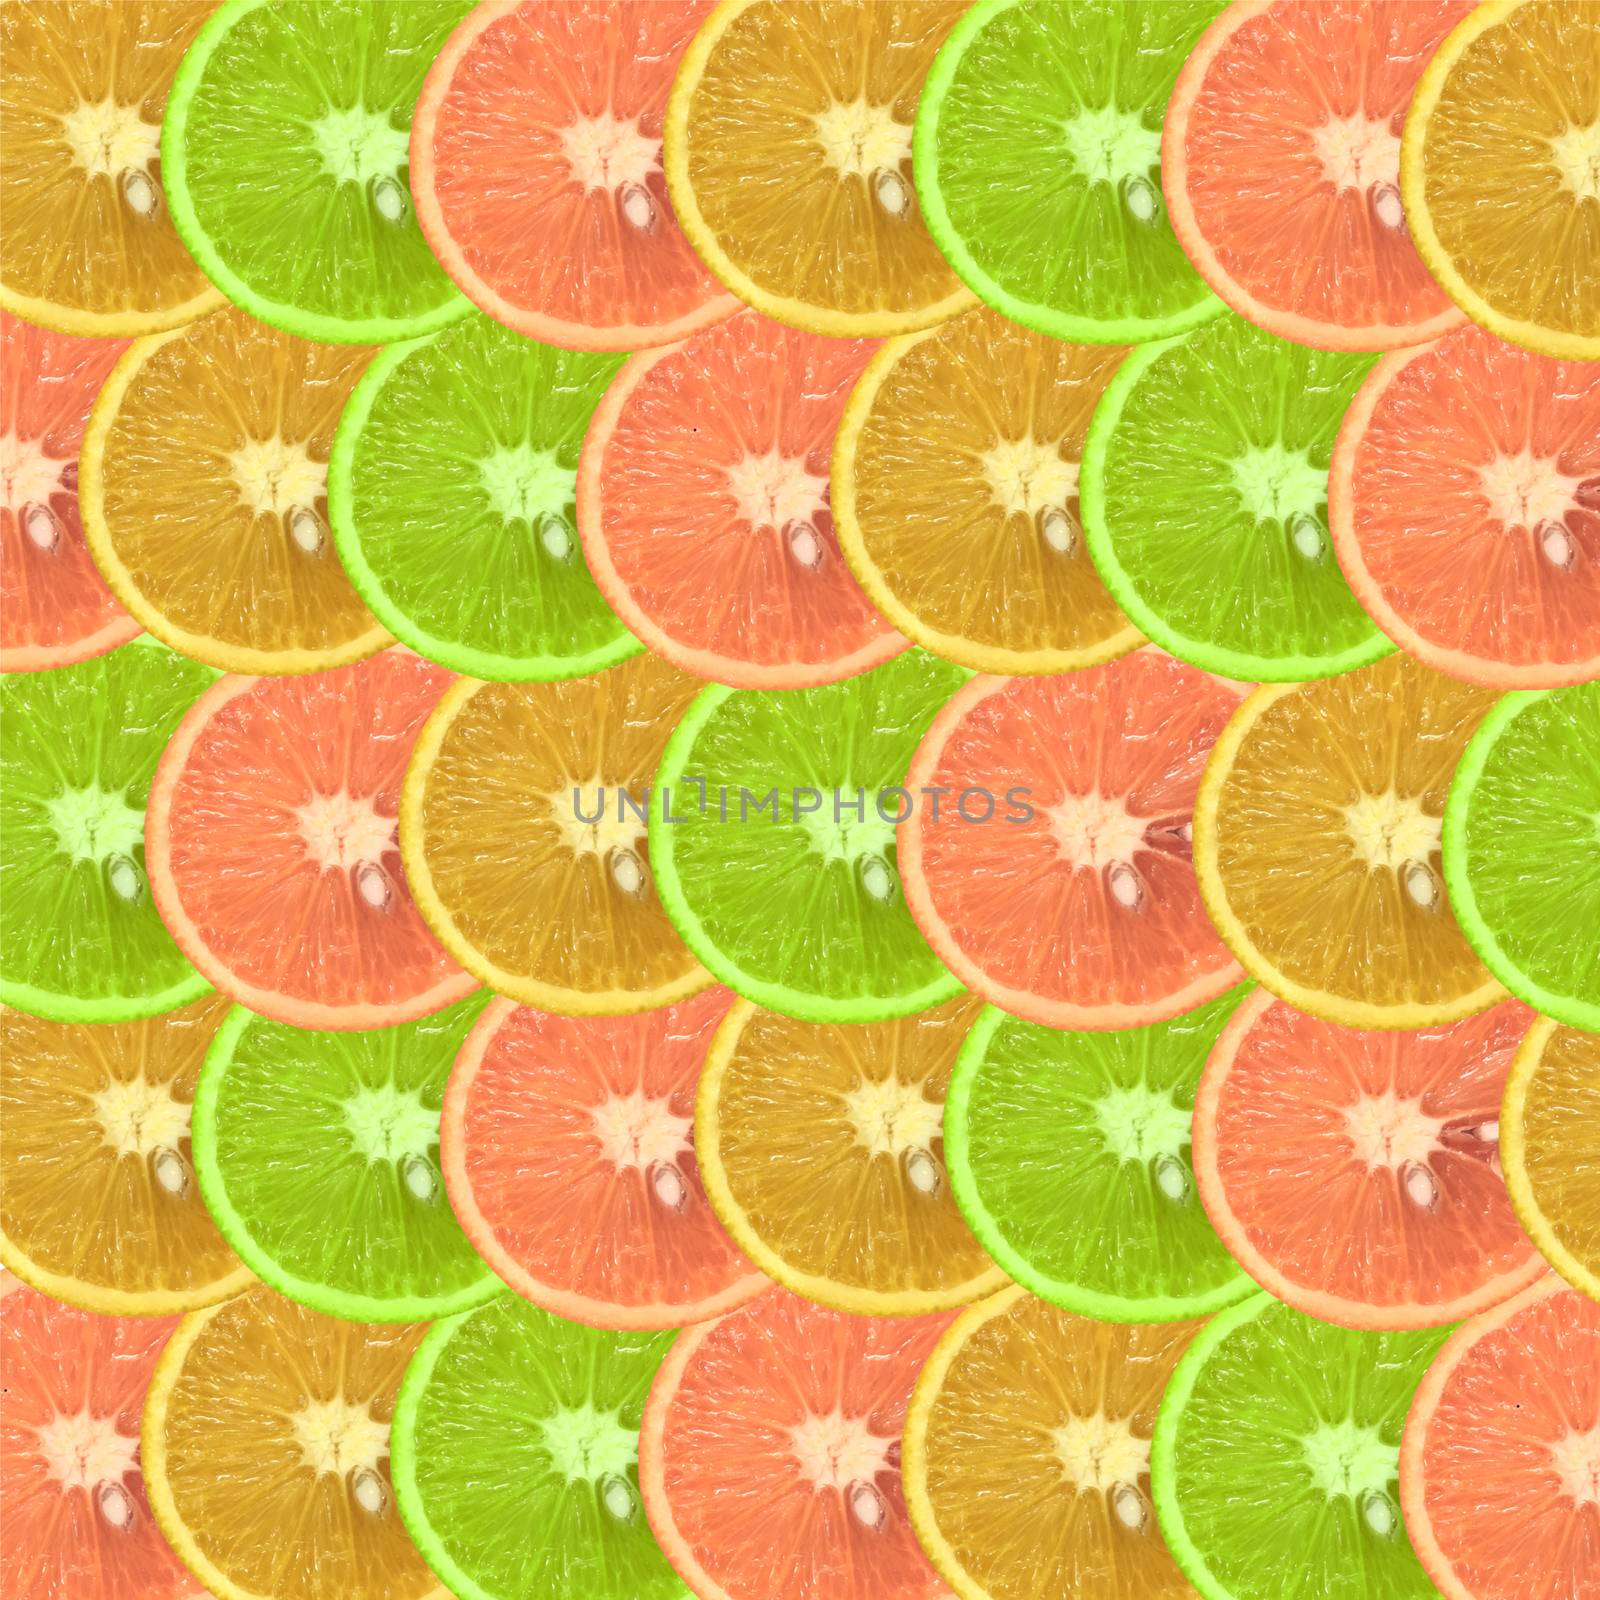 Fruit pattern of fresh orange slices.  by Margolana